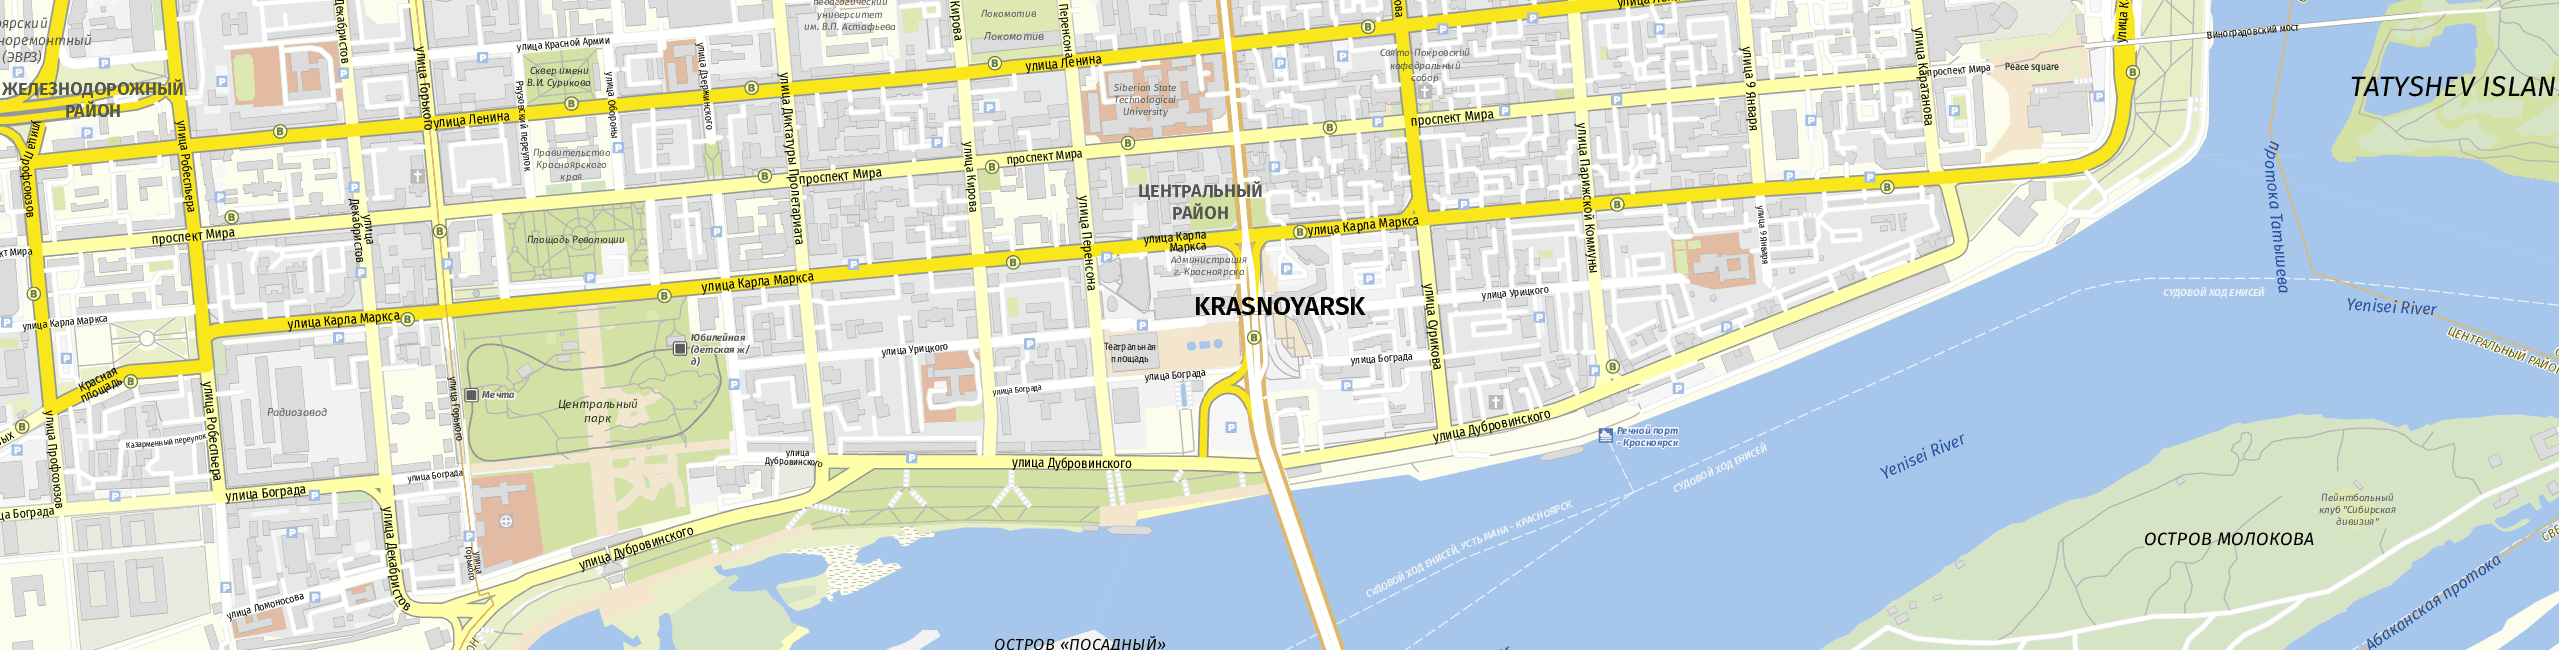 Stadtplan Krasnojarsk zum Downloaden.